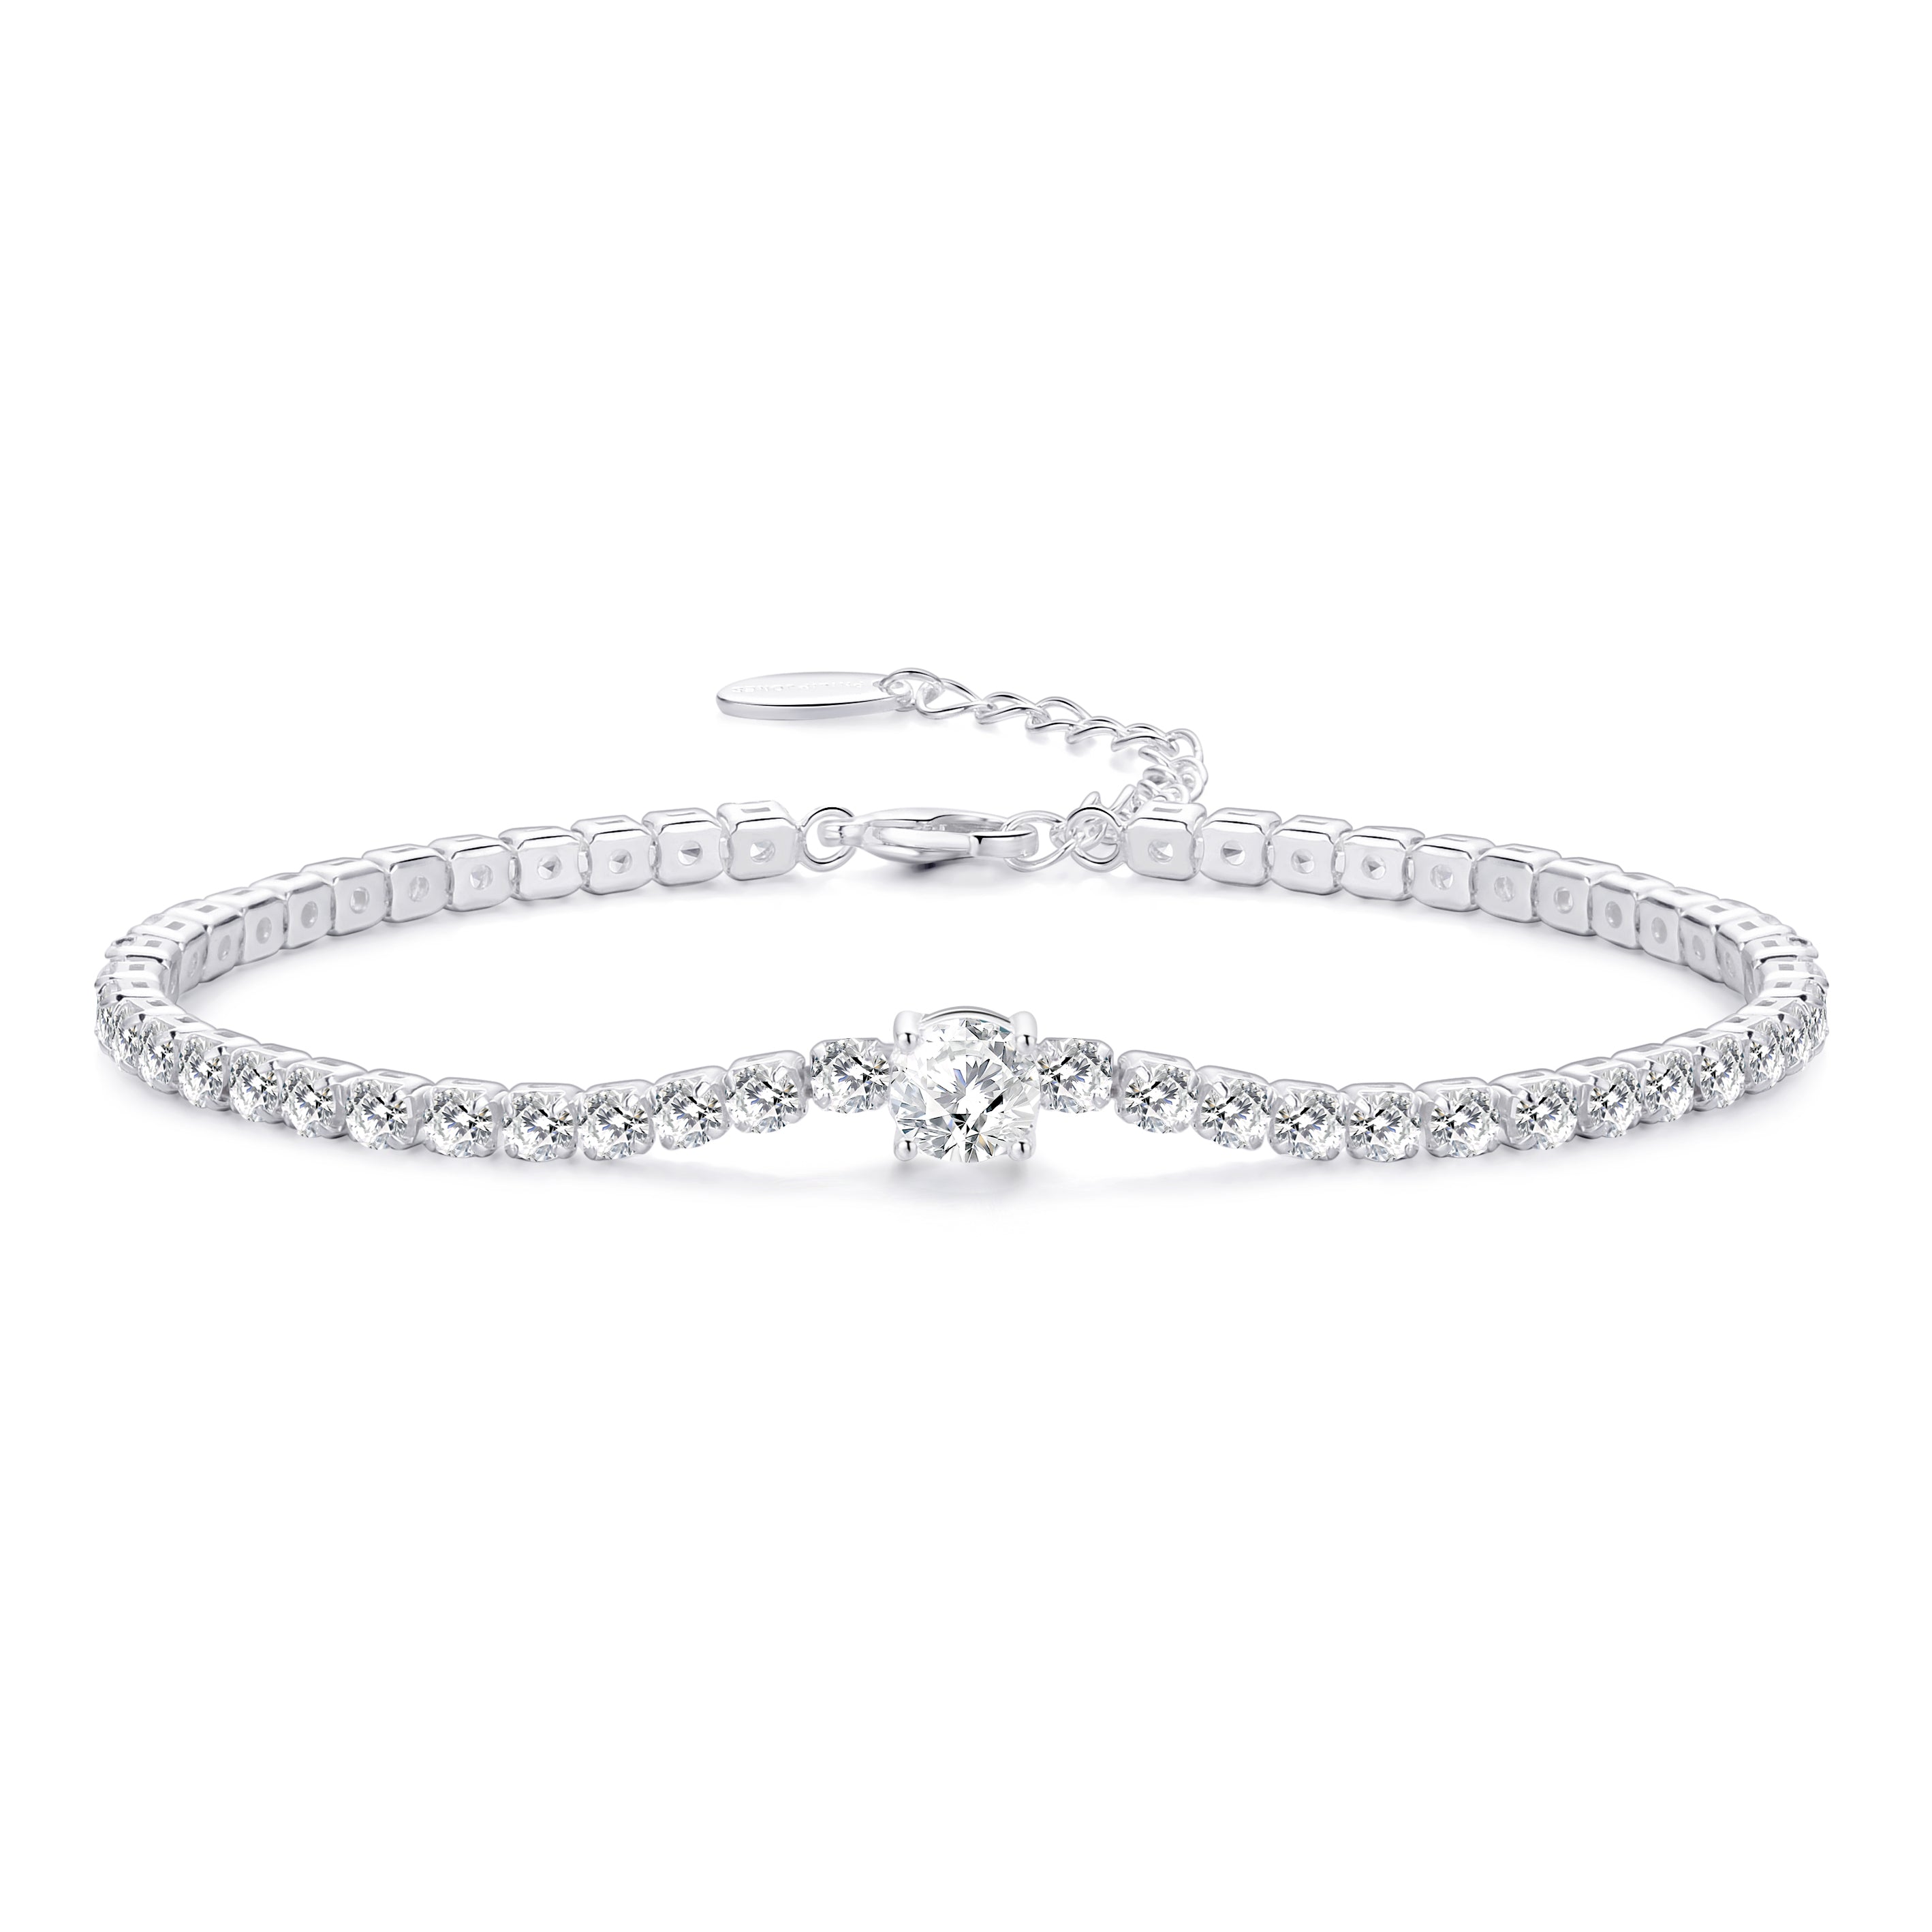 Round Solitaire Tennis Bracelet Created with Zircondia® Crystals by Philip Jones Jewellery